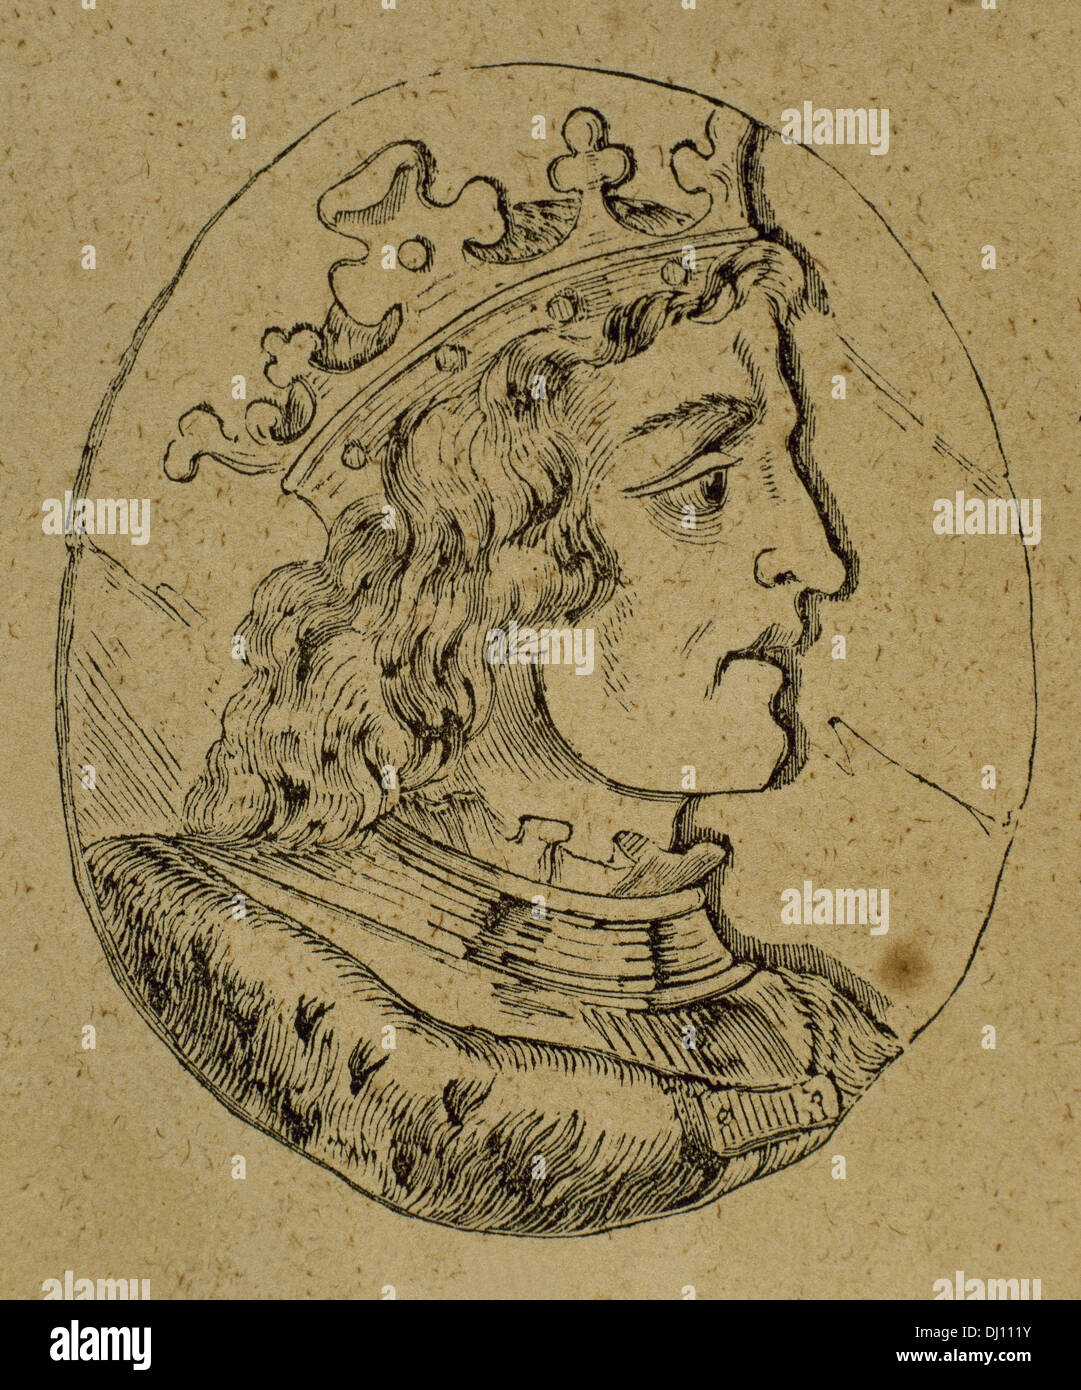 Ramiro III (961–985), king of León (966–984). Engraving. Stock Photo